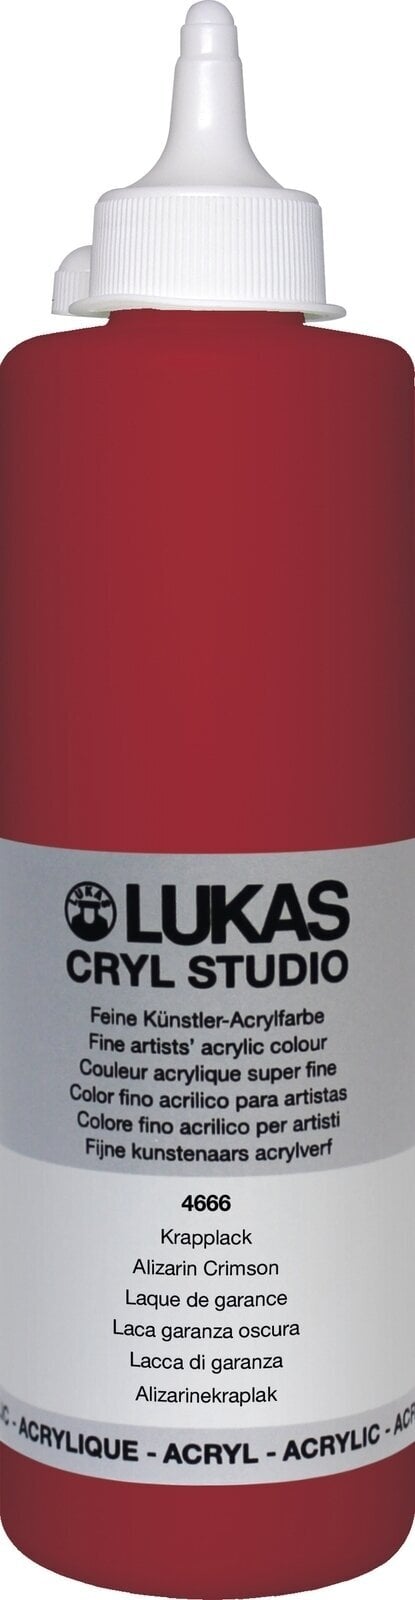 Acrylic Paint Lukas Cryl Studio Acrylic Paint 500 ml Alizarin Crimson